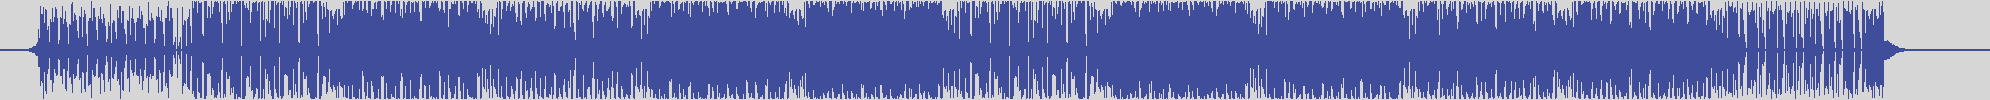 nf_boyz_records [NFY046] Karismatic - Reservation 1 [K15 Mix] audio wave form